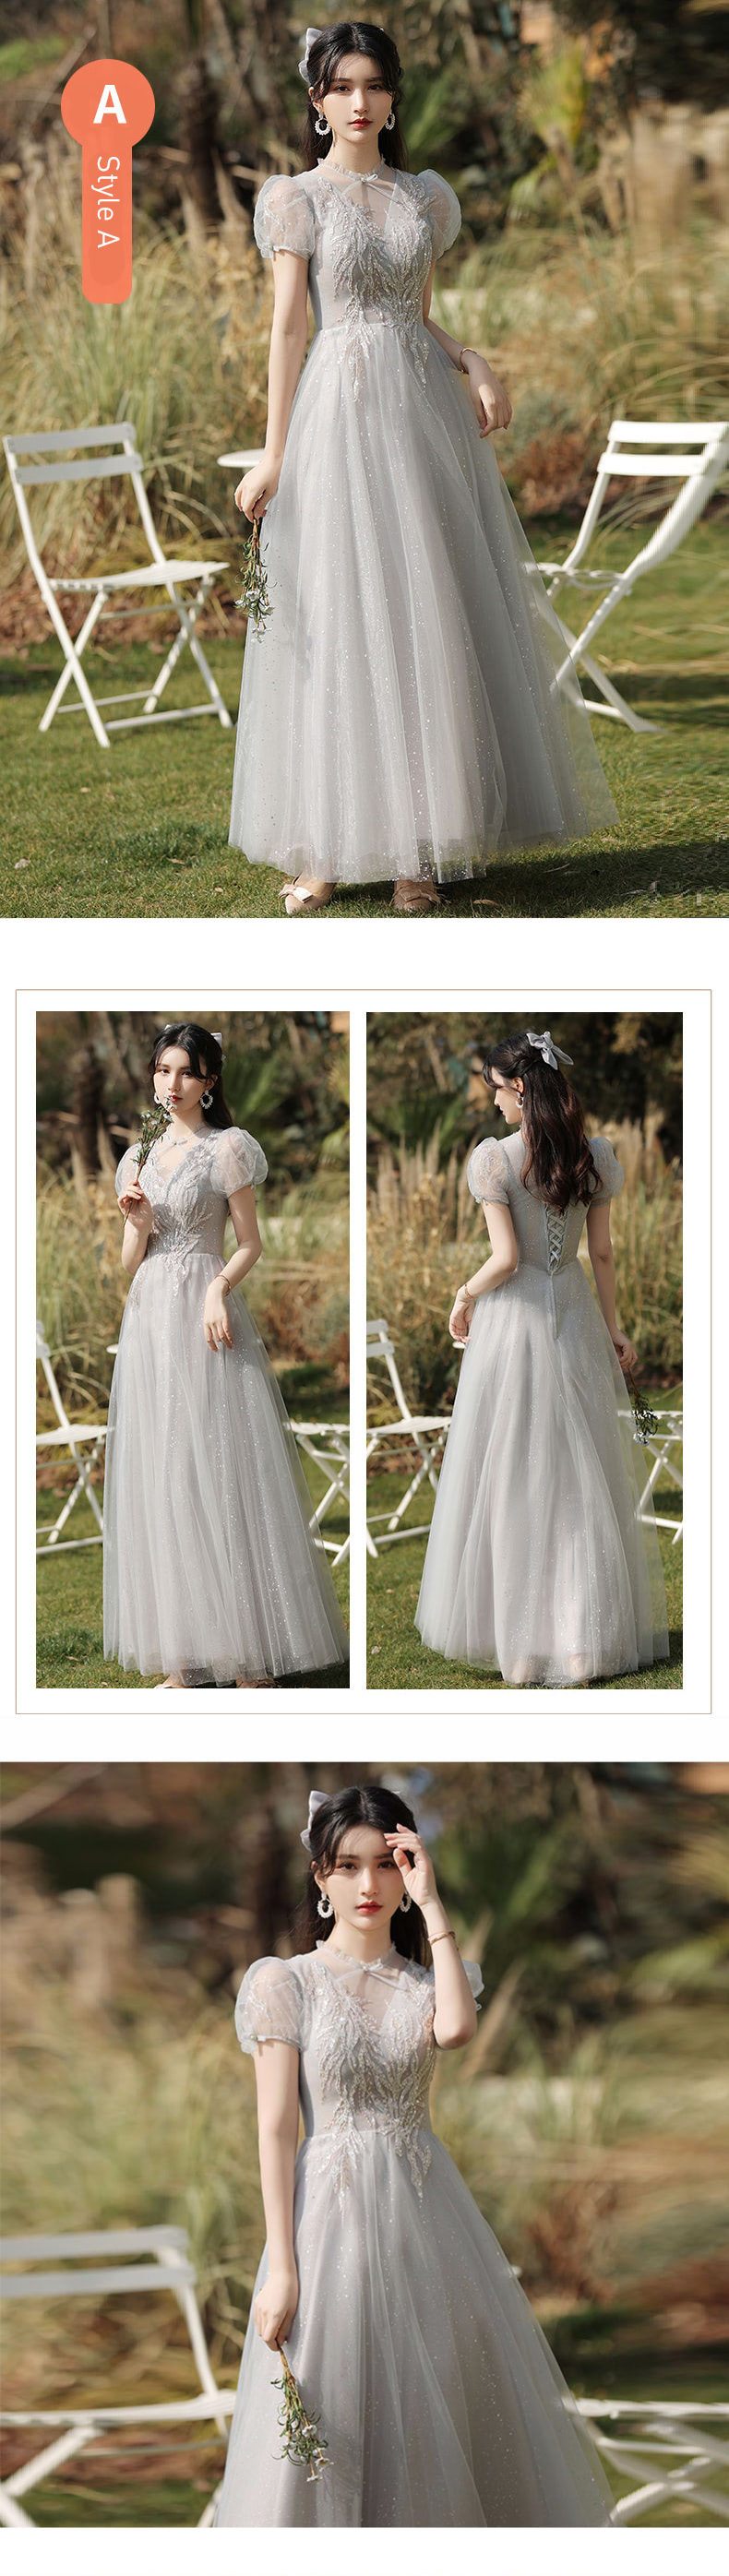 Beautiful-Gray-Occasion-Prom-Bridesmaid-Evening-Maxi-Dress17.jpg